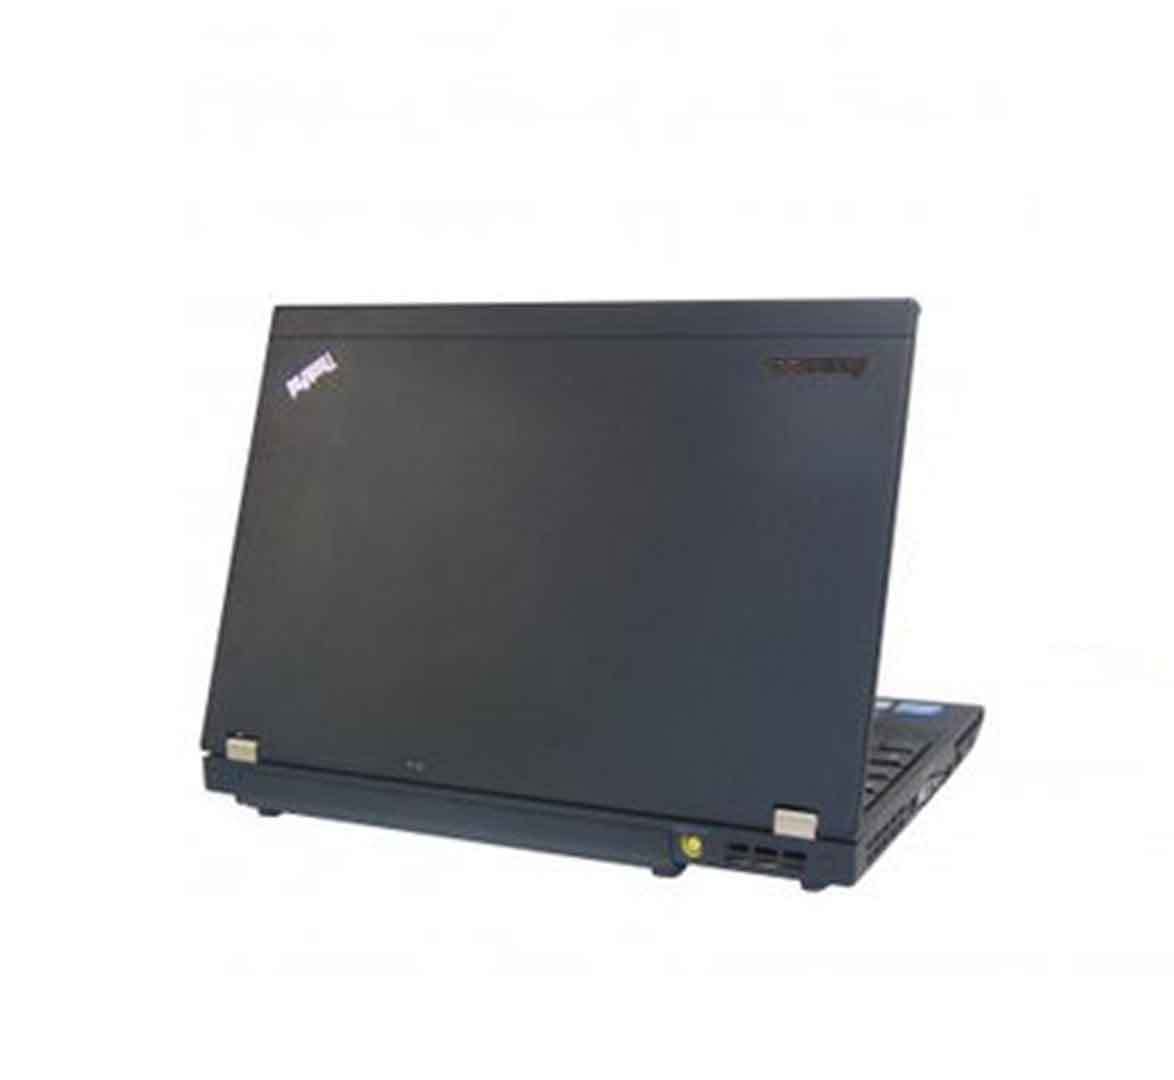 Lenovo ThinkPad X230 Business Laptop, Intel Core i7-3rd Generation CPU, 4GB RAM, 500GB HDD, 12 inch Display, Windows 10 Pro